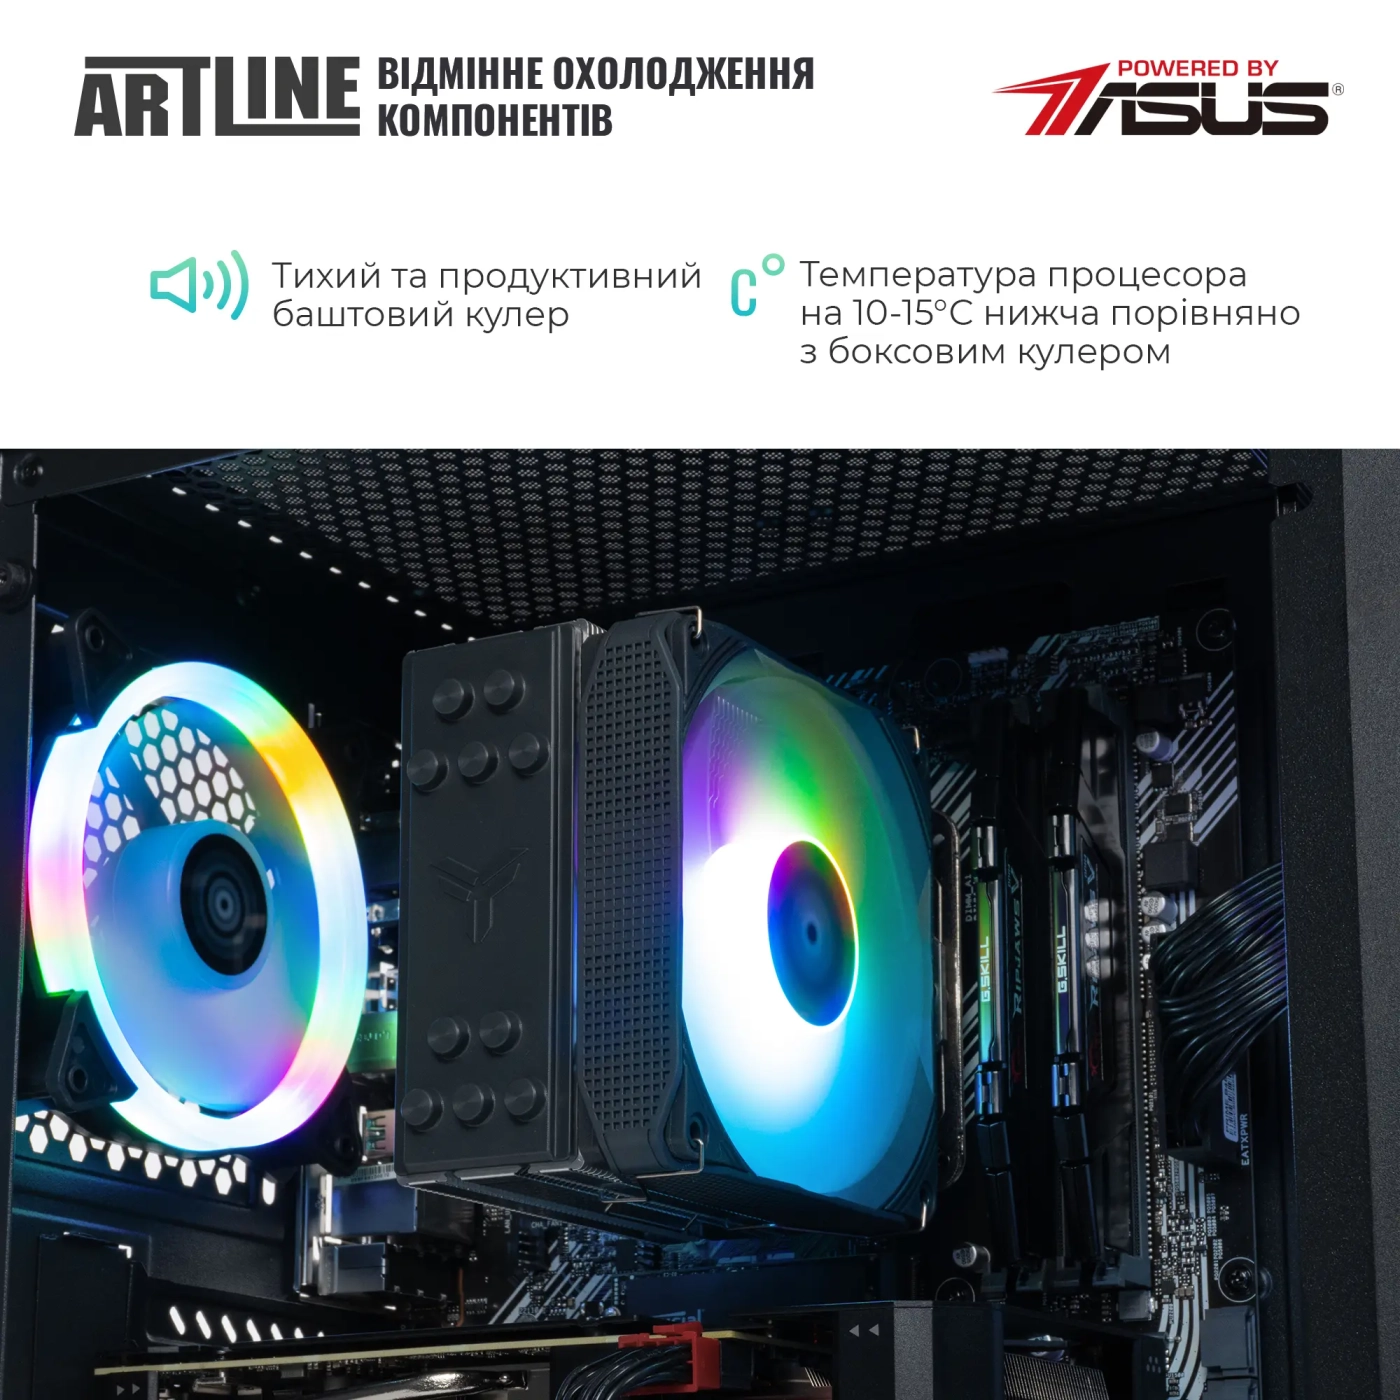 Купить Компьютер ARTLINE Gaming X81 (X81v31) - фото 5